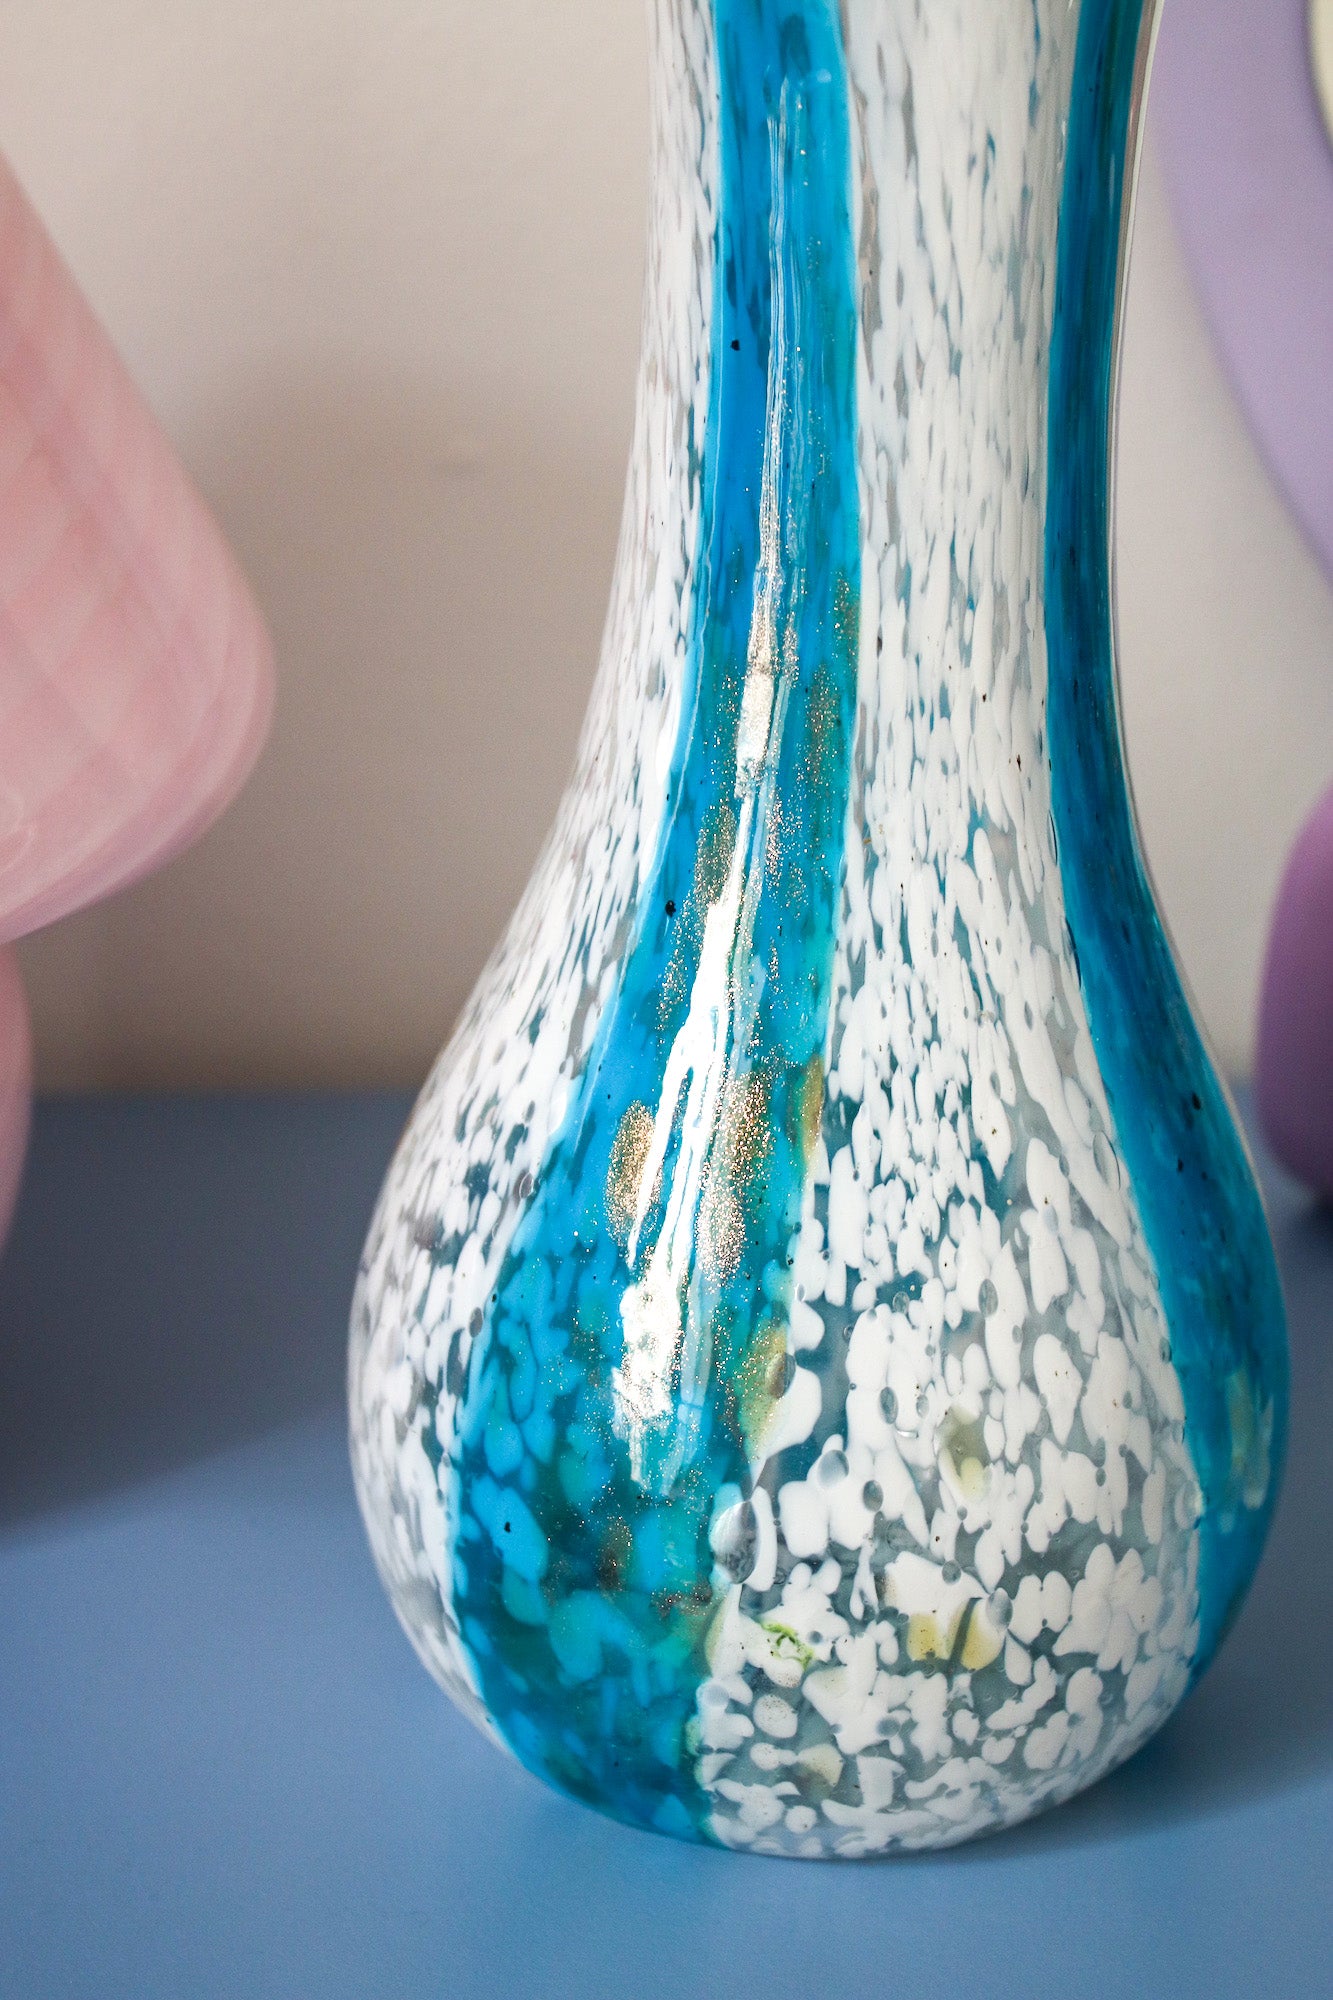 Grand vase de Clichy bleu et blanc